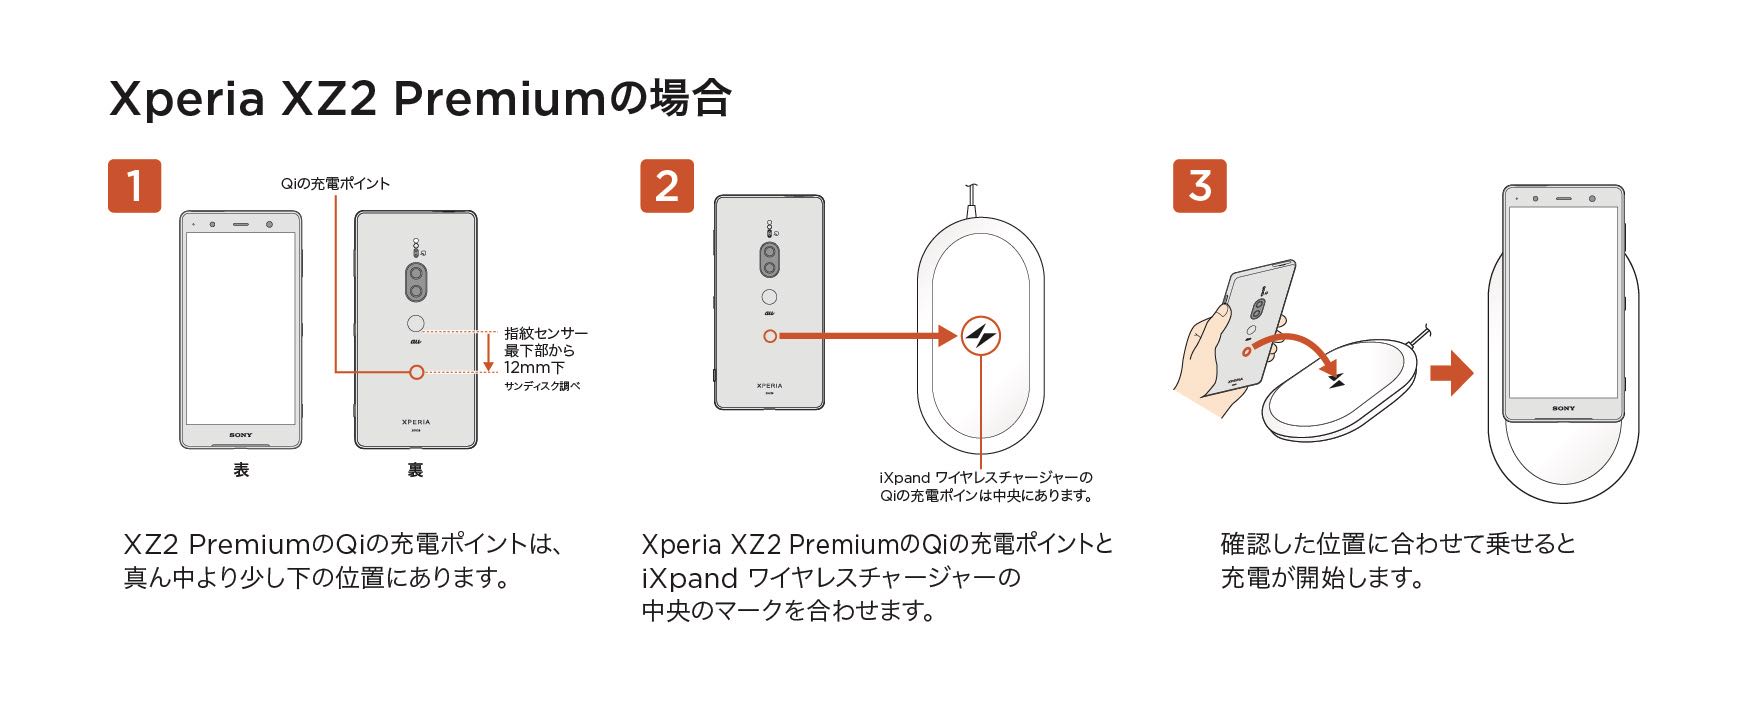 Xperia XZ2 Premiumの場合